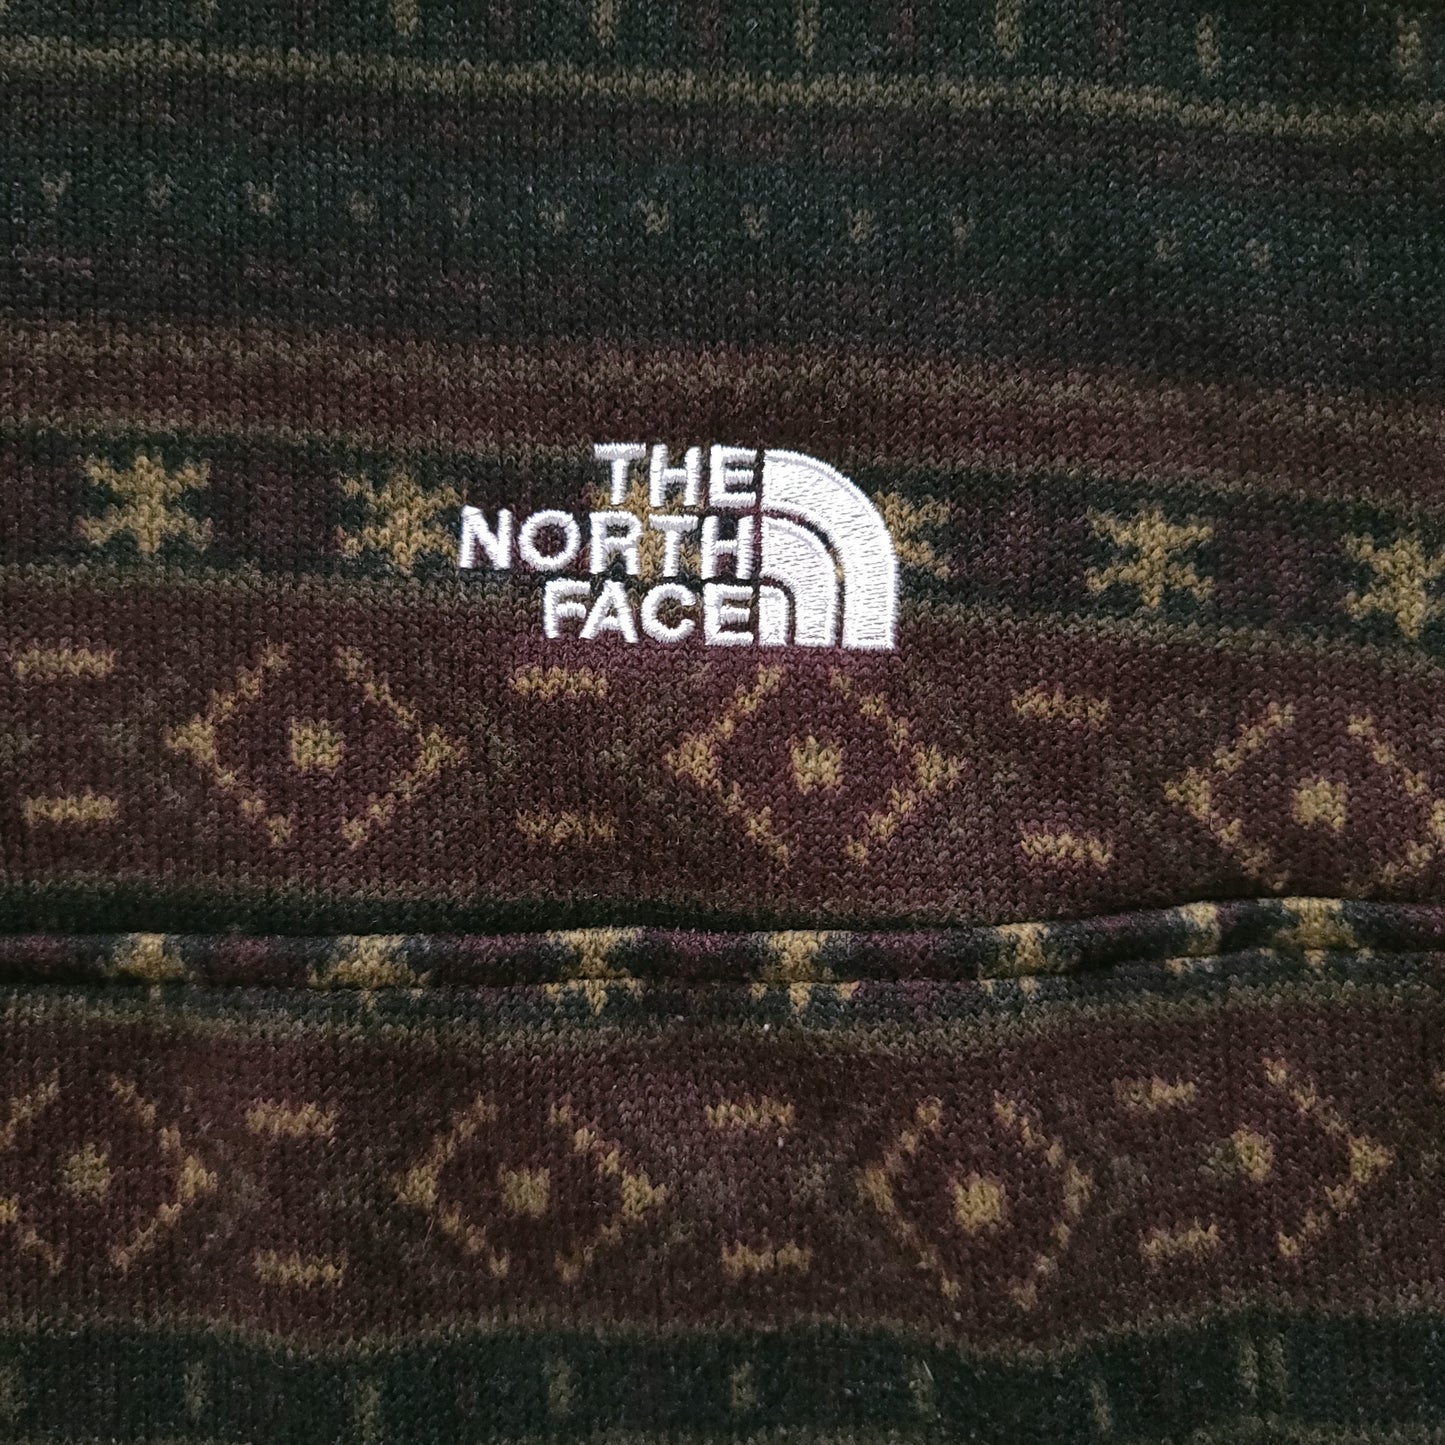 North Face Aztec Print 1/4 Zip Sweater Black Brown